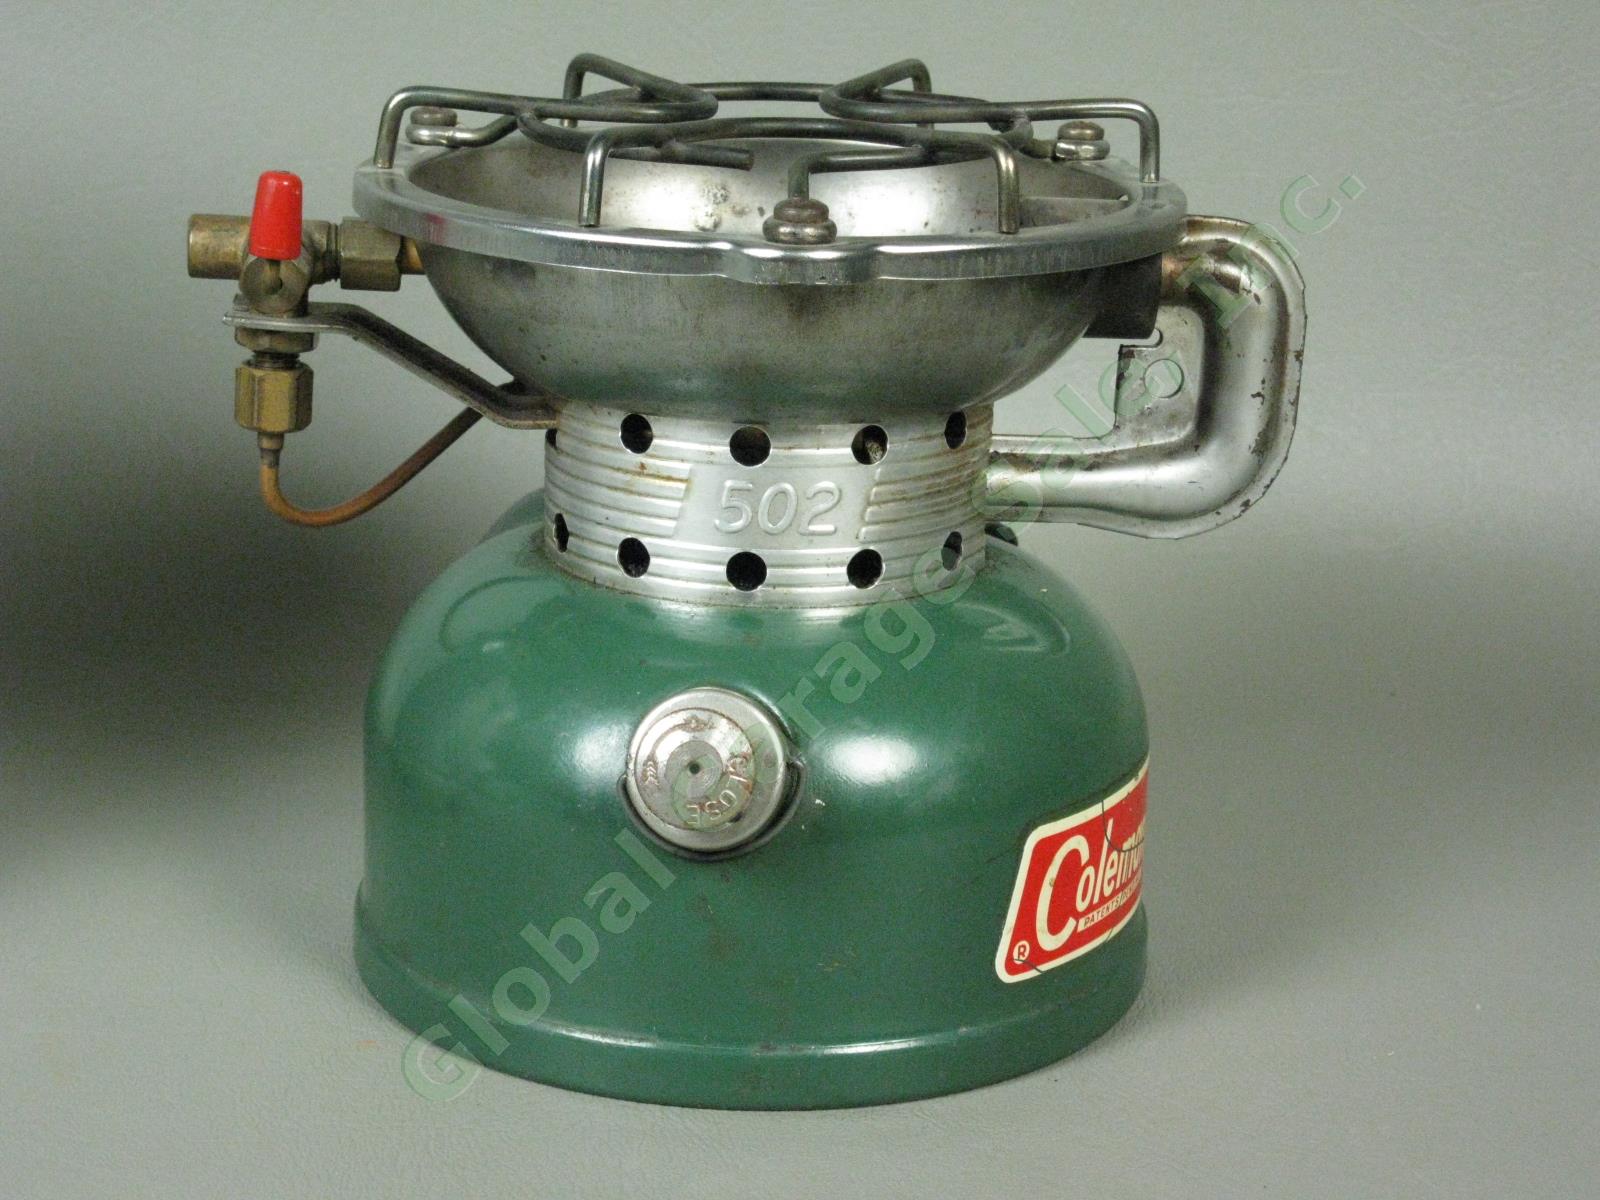 VTG Coleman 502 Sportster Miniature 1 Burnor Stove Heat Drum Set 12-68 1968 NR 4